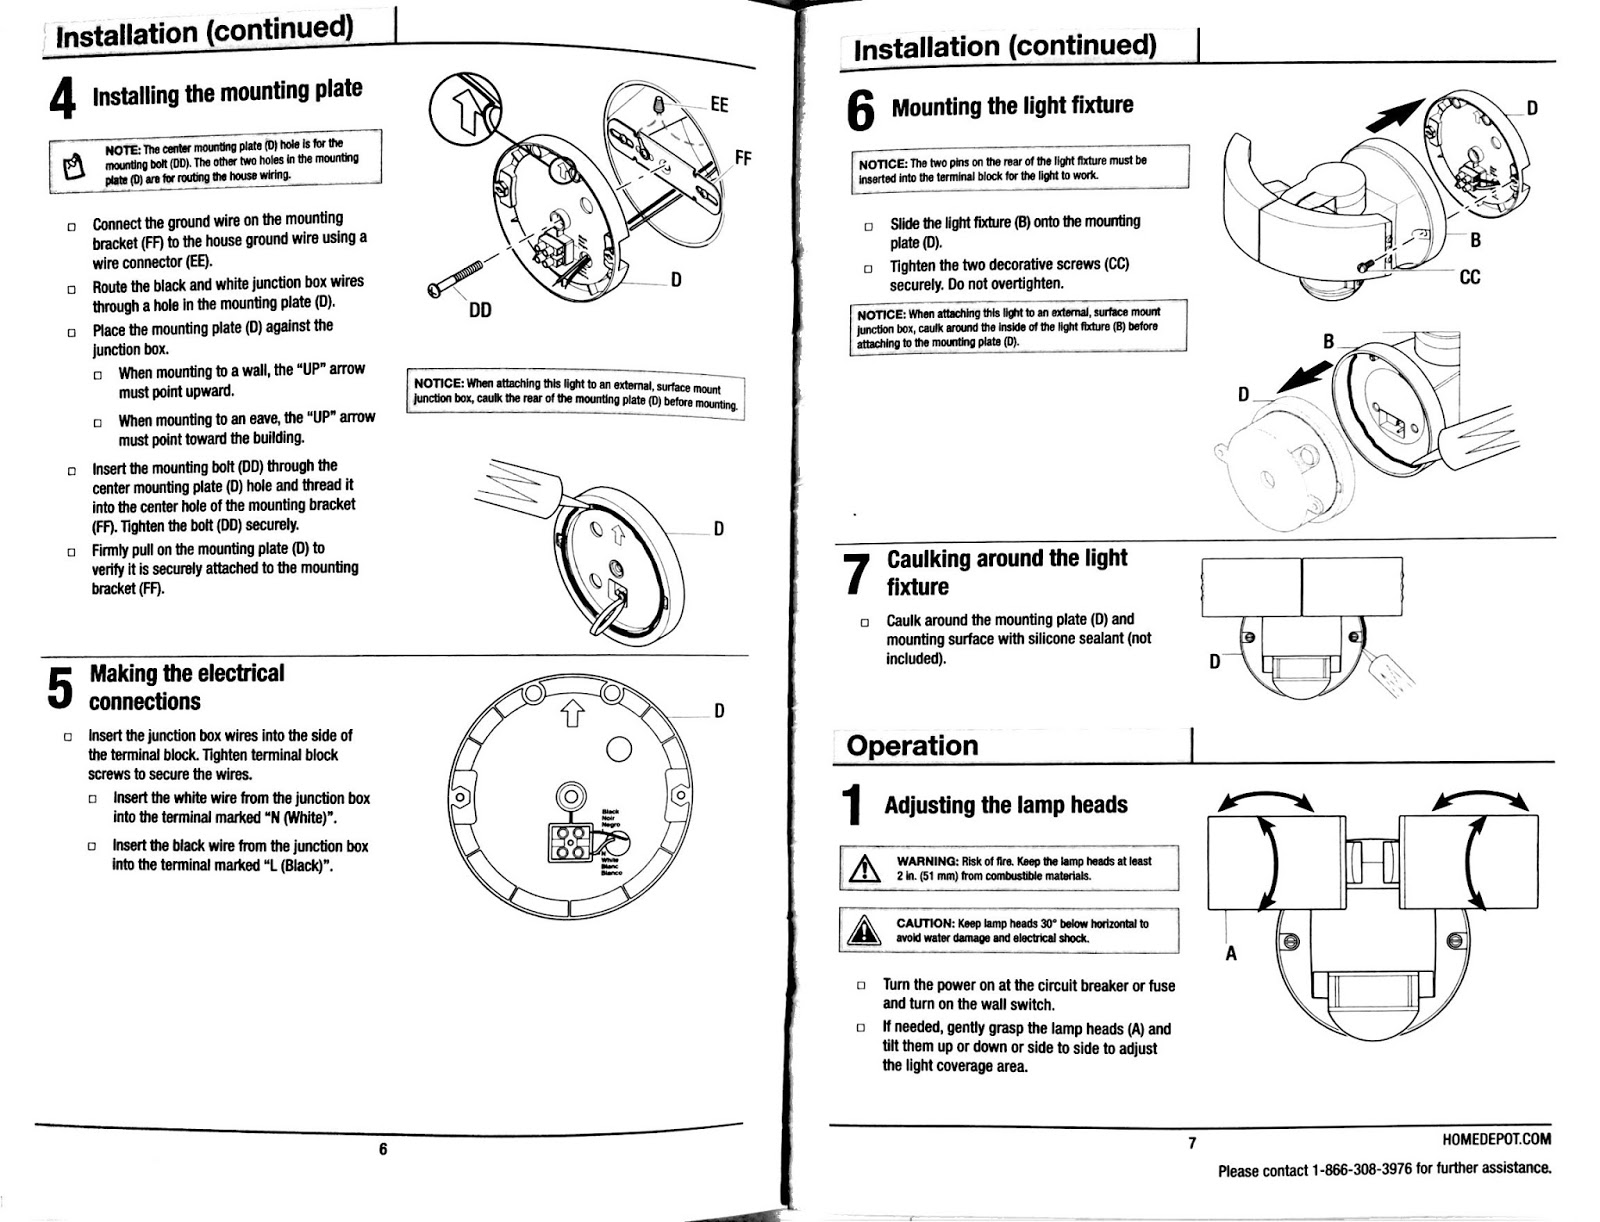 Defiant Motion Sensor Light Manual